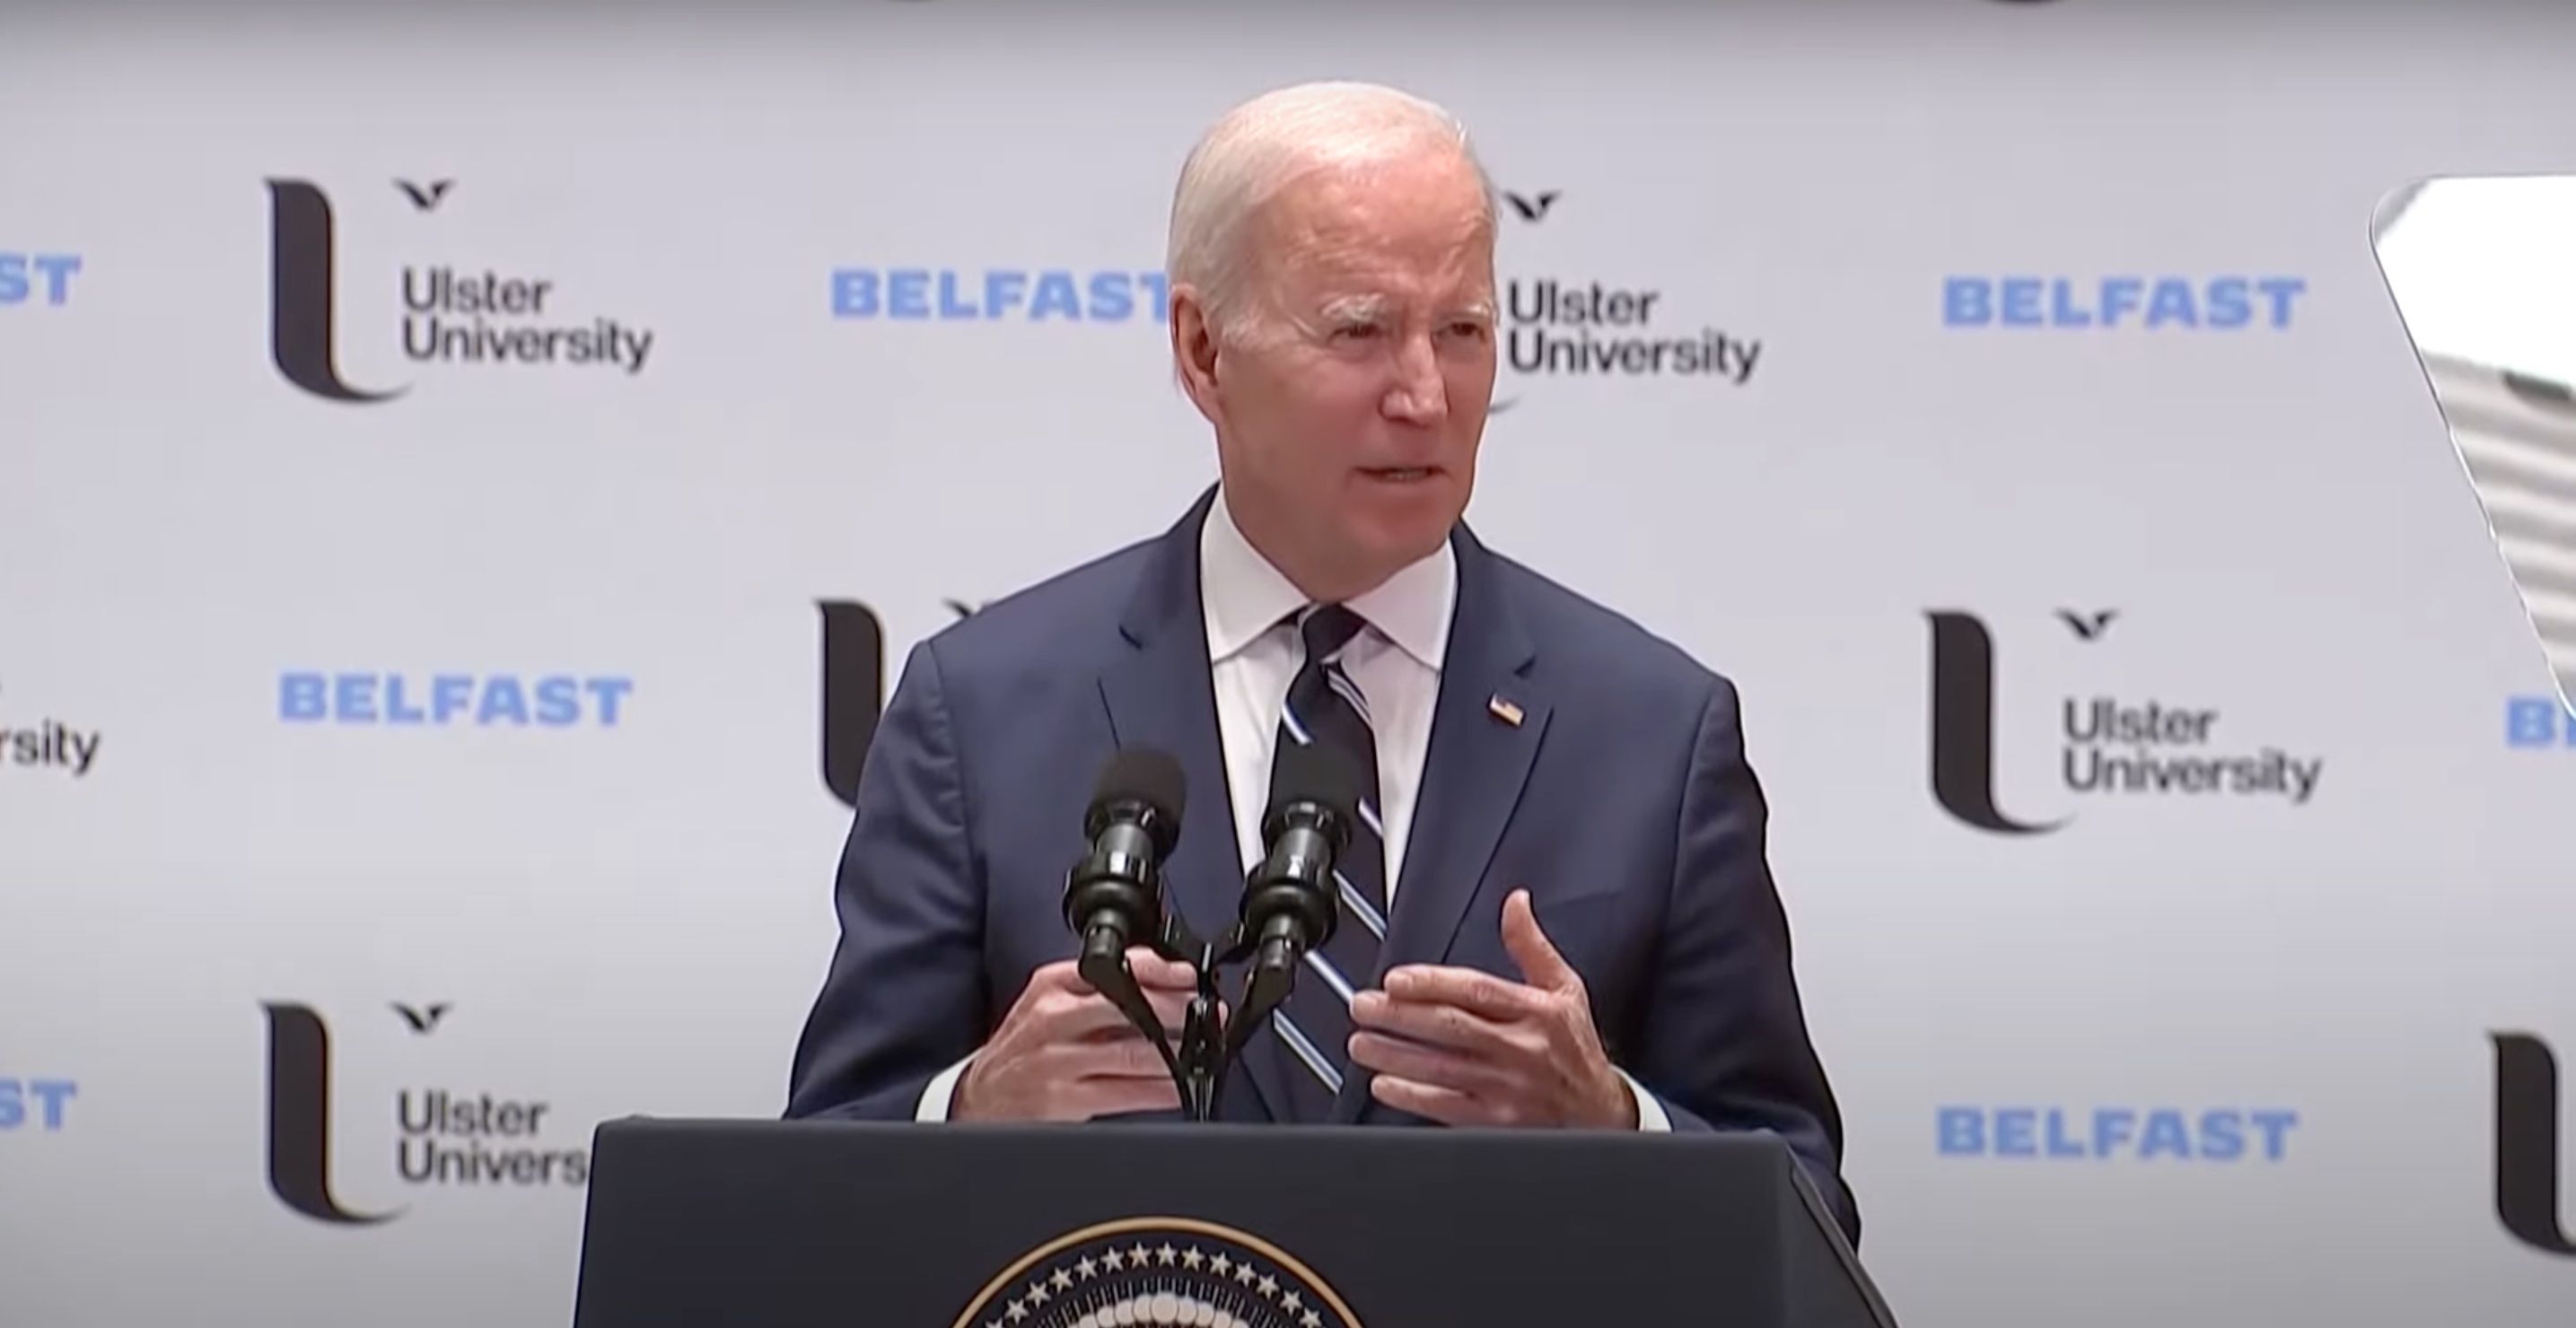 SPEECH: US President Joe Biden spoke at Ulster University on Wednesday afternoon